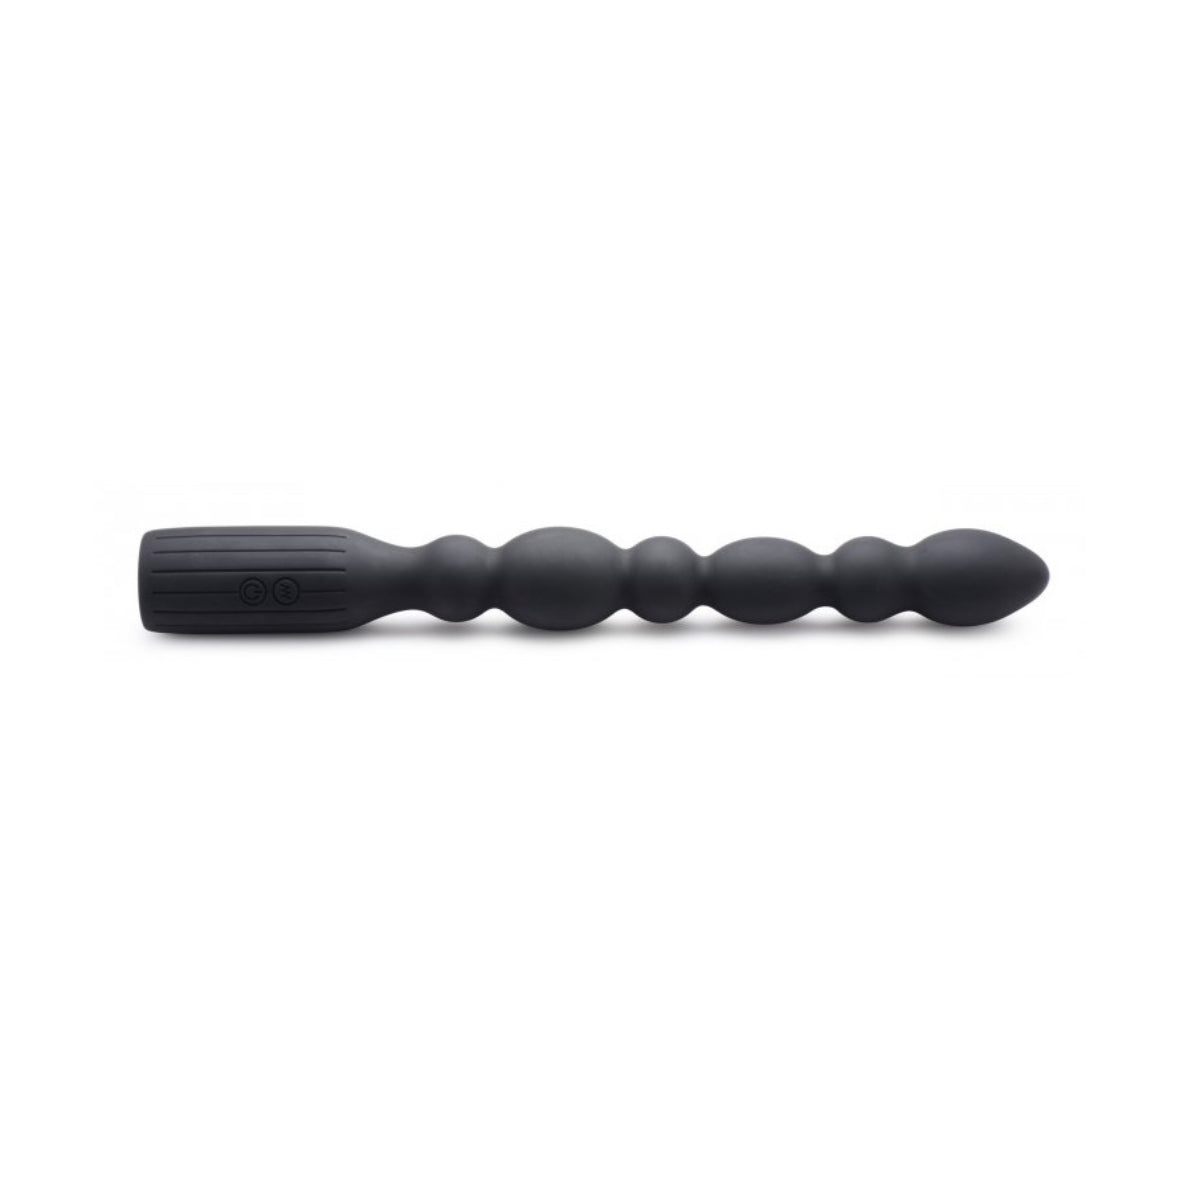 Master Series Viper Beads Premium Silicone Anal Beads Vibrator Black